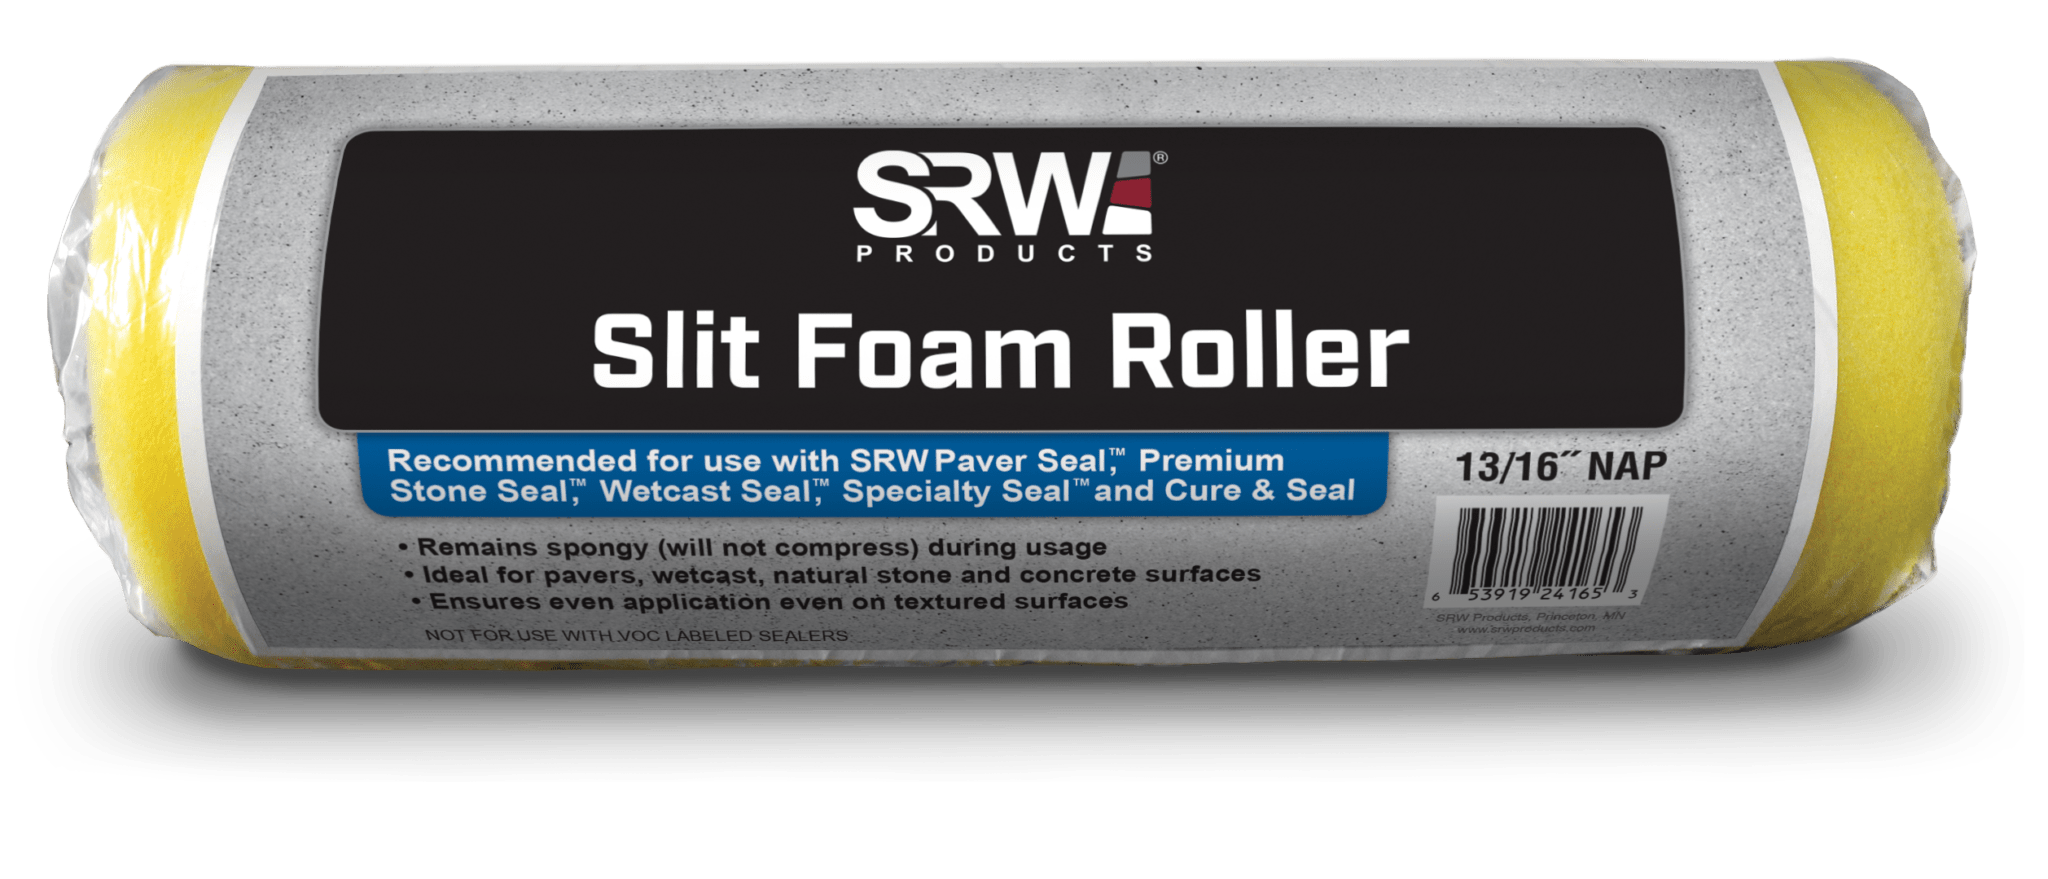 SRW Slit Foam Roller